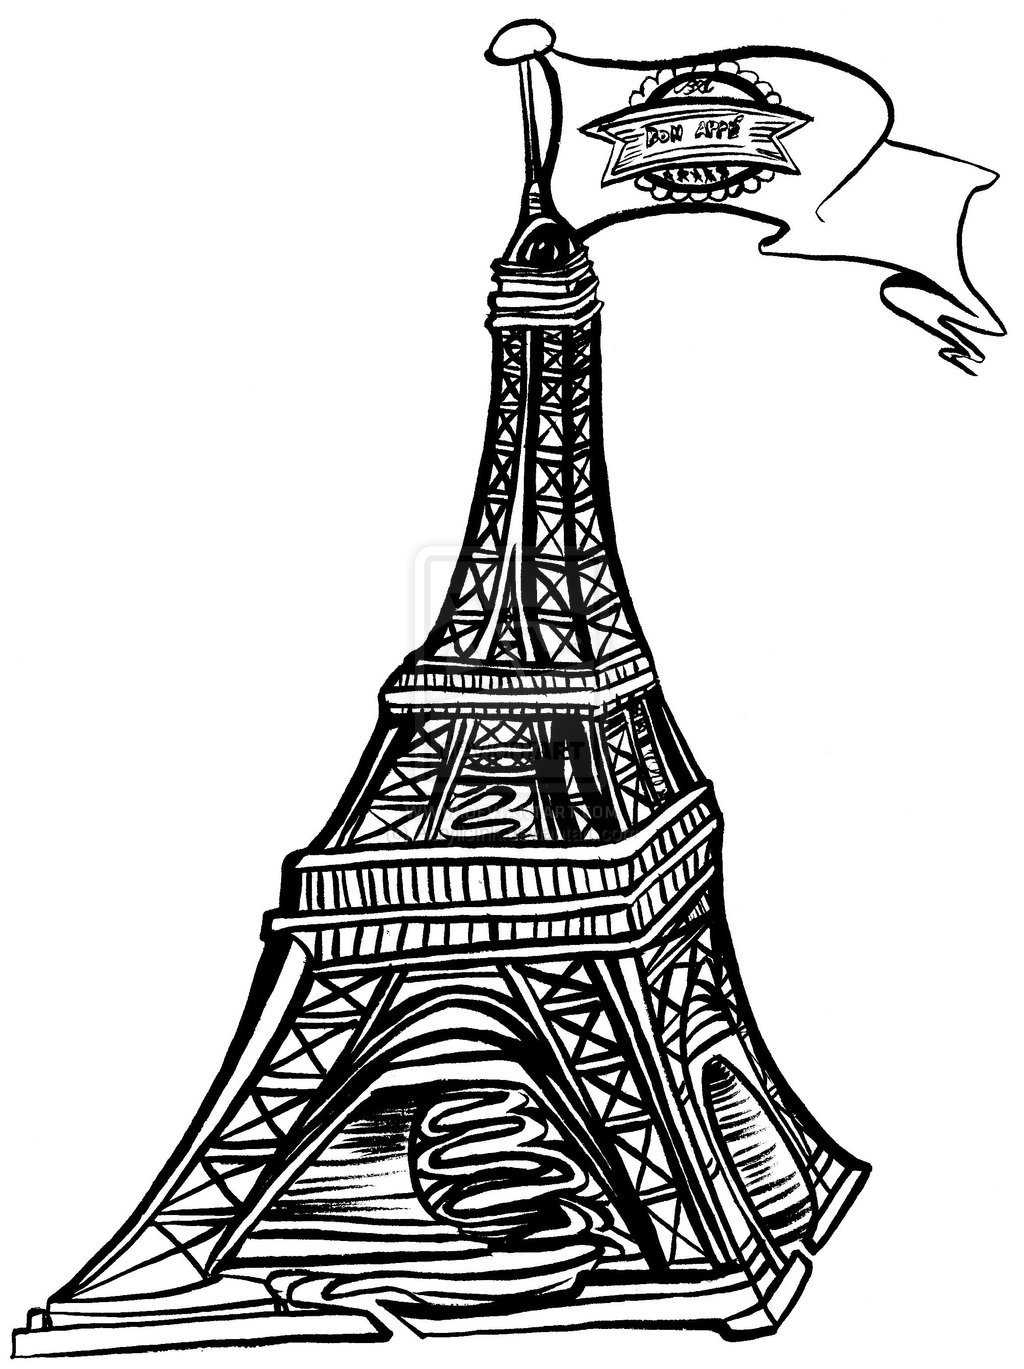 Eiffel Tower Concept no 2.